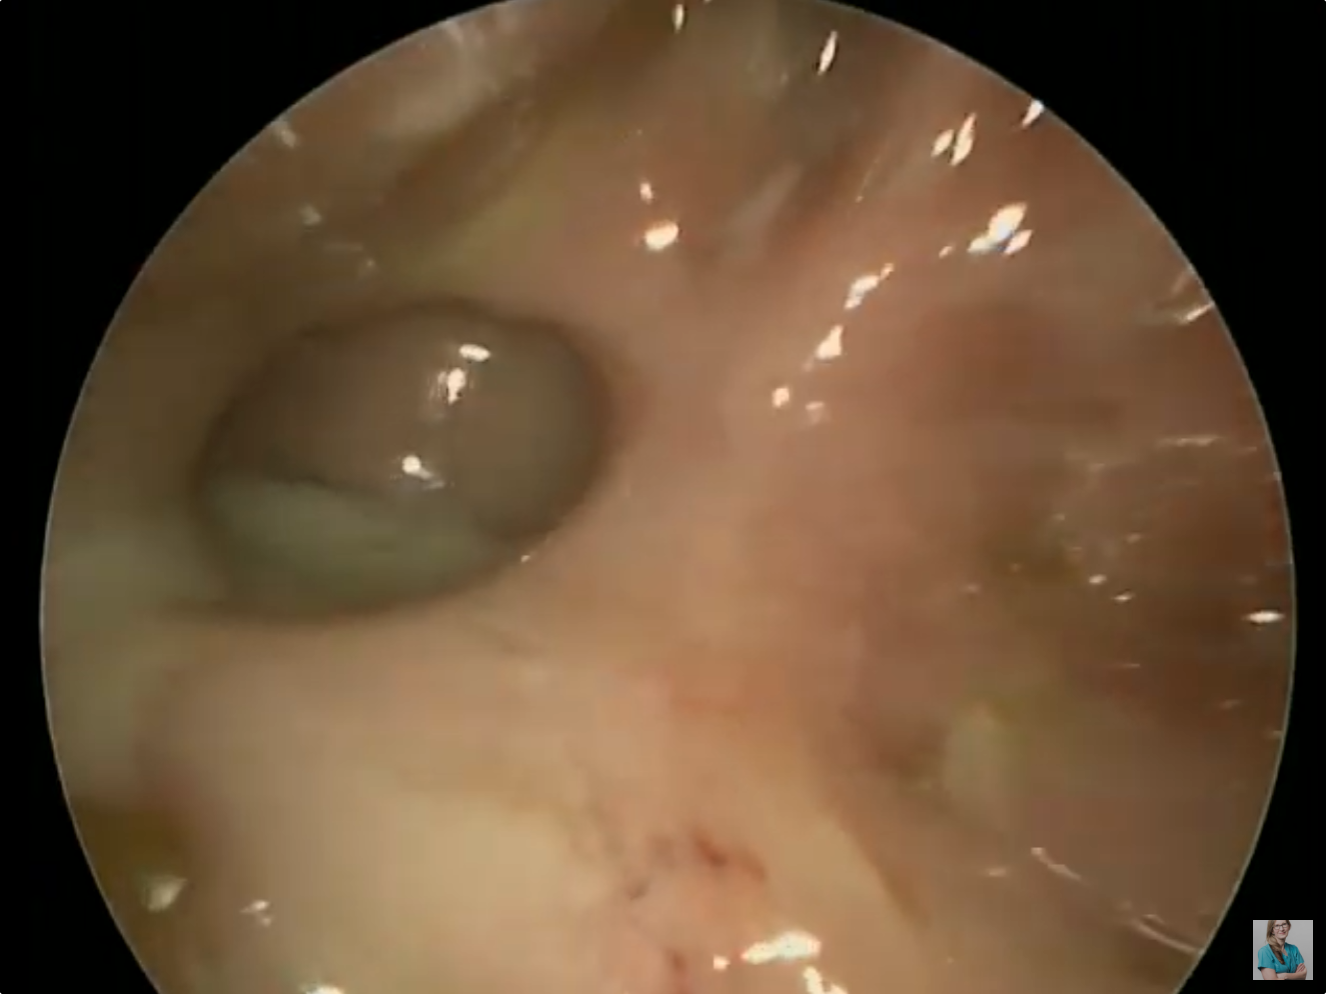 Sinus Infection - Pus in the Sphenoid Sinus video thumbnail.